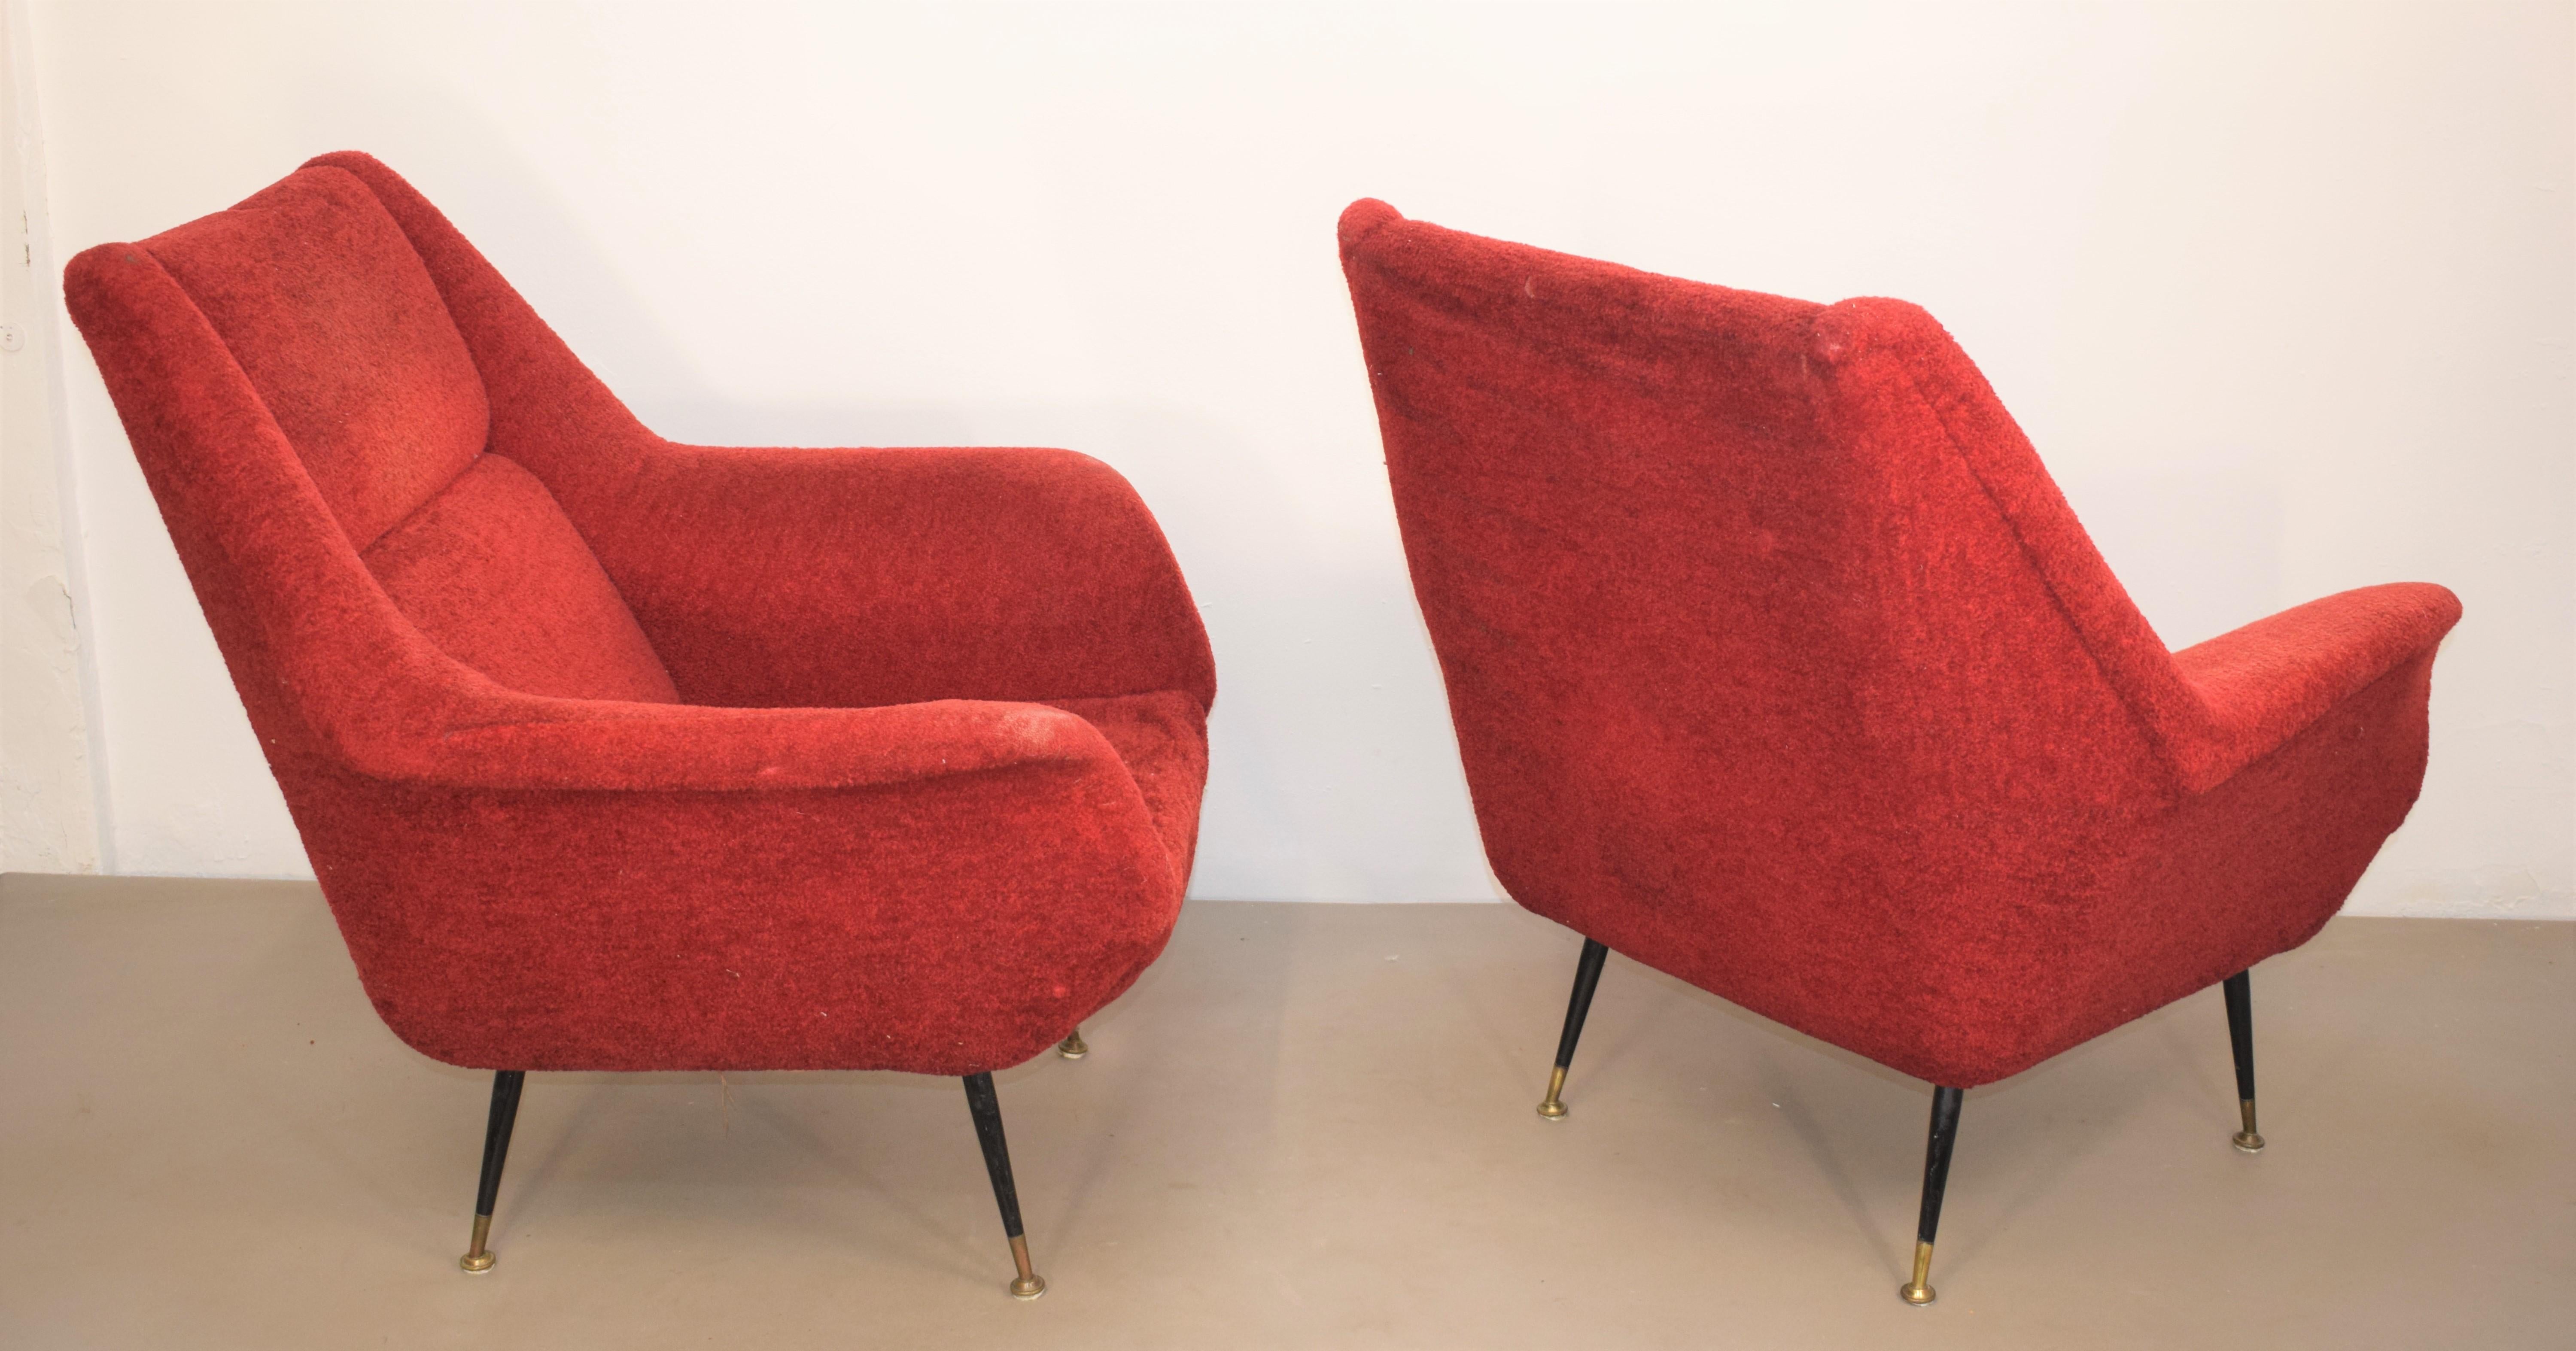 Pair of Italian armchairs by Gigi Radice, 1960s.

Dimensions: H= 90 cm; W= 85 cm; D= 85 cm; Height seat = 40 cm.